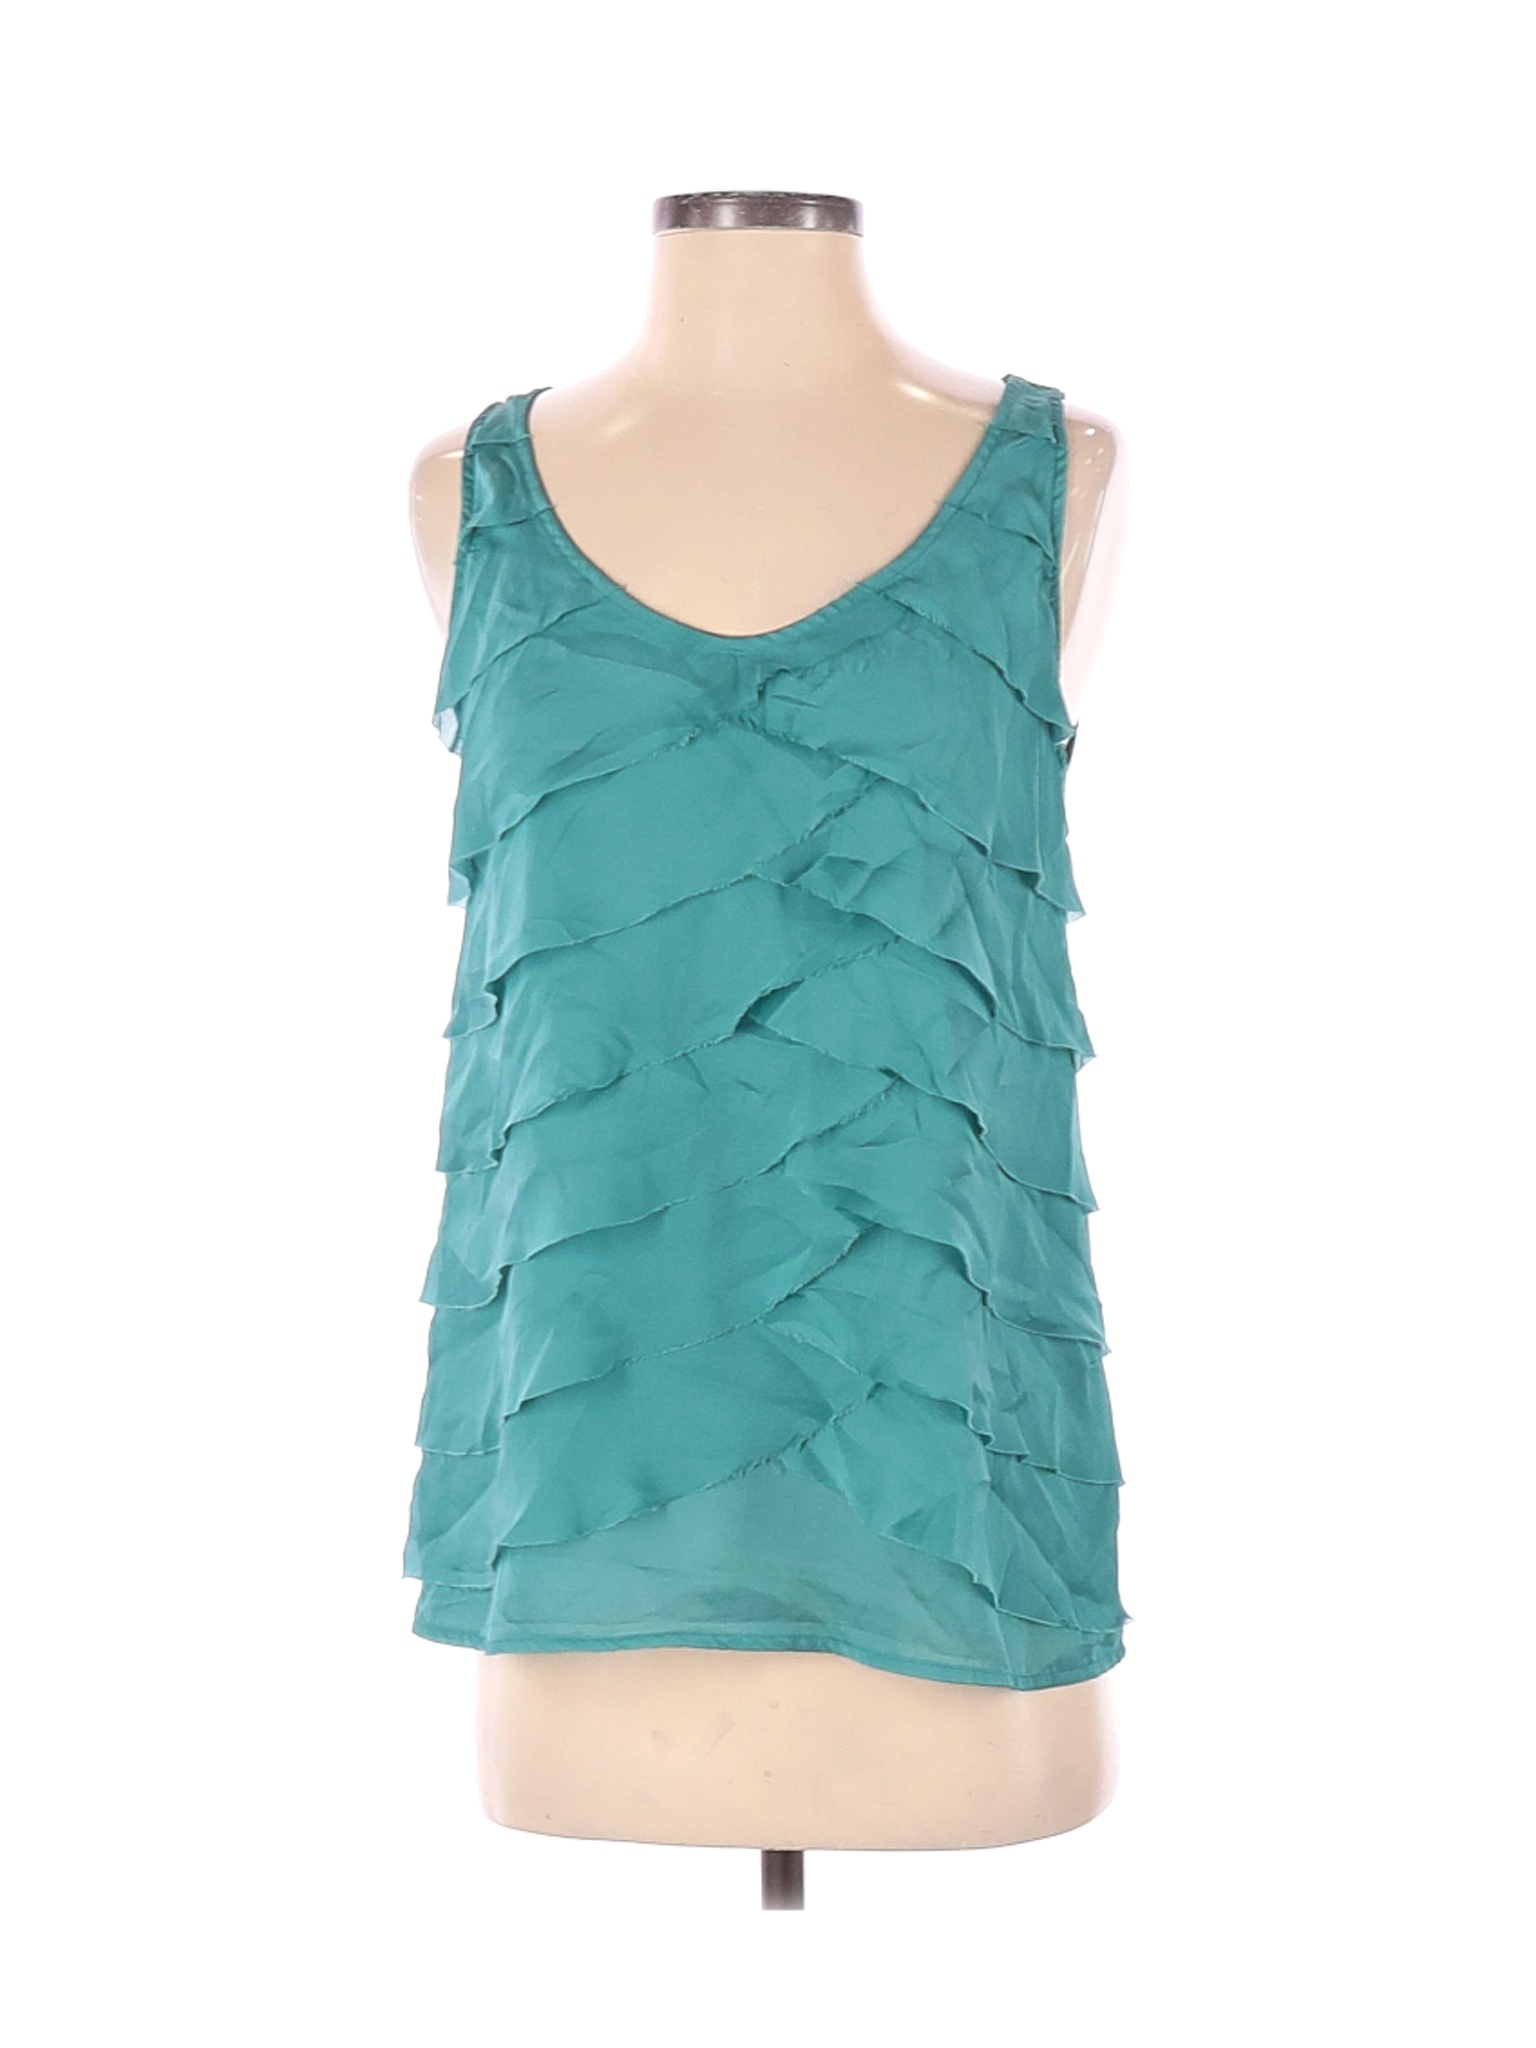 The Limited Women Green Sleeveless Blouse S | eBay